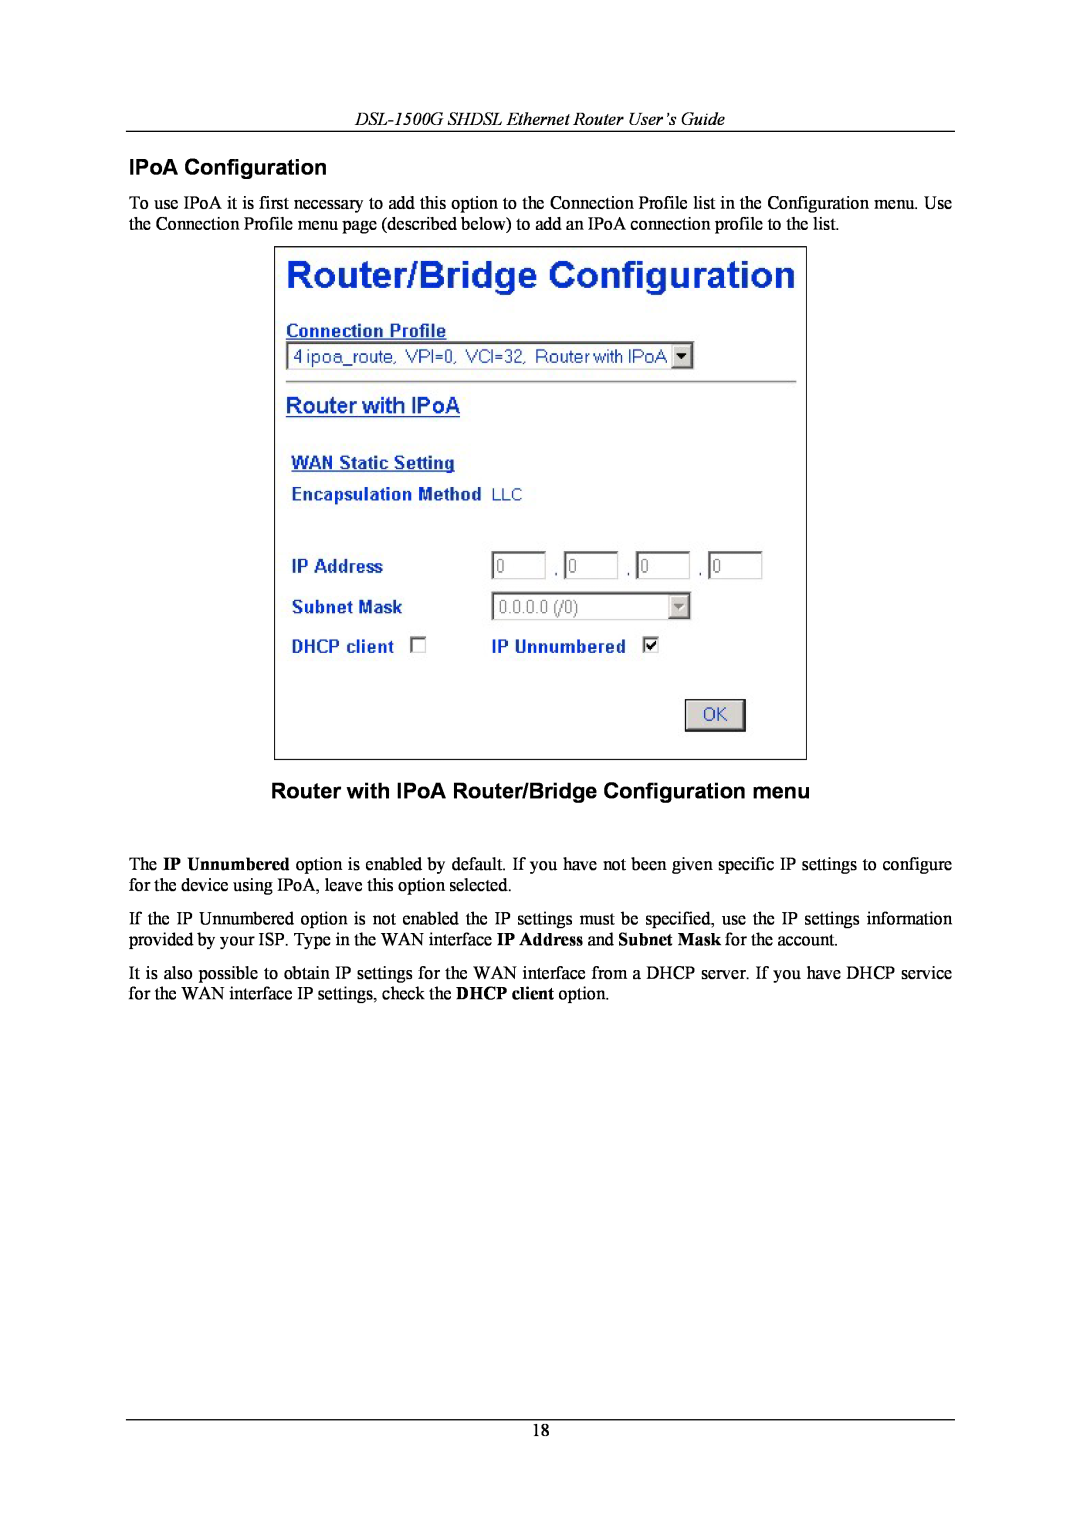 D-Link DSL-1500G manual IPoA Configuration, Router with IPoA Router/Bridge Configuration menu 